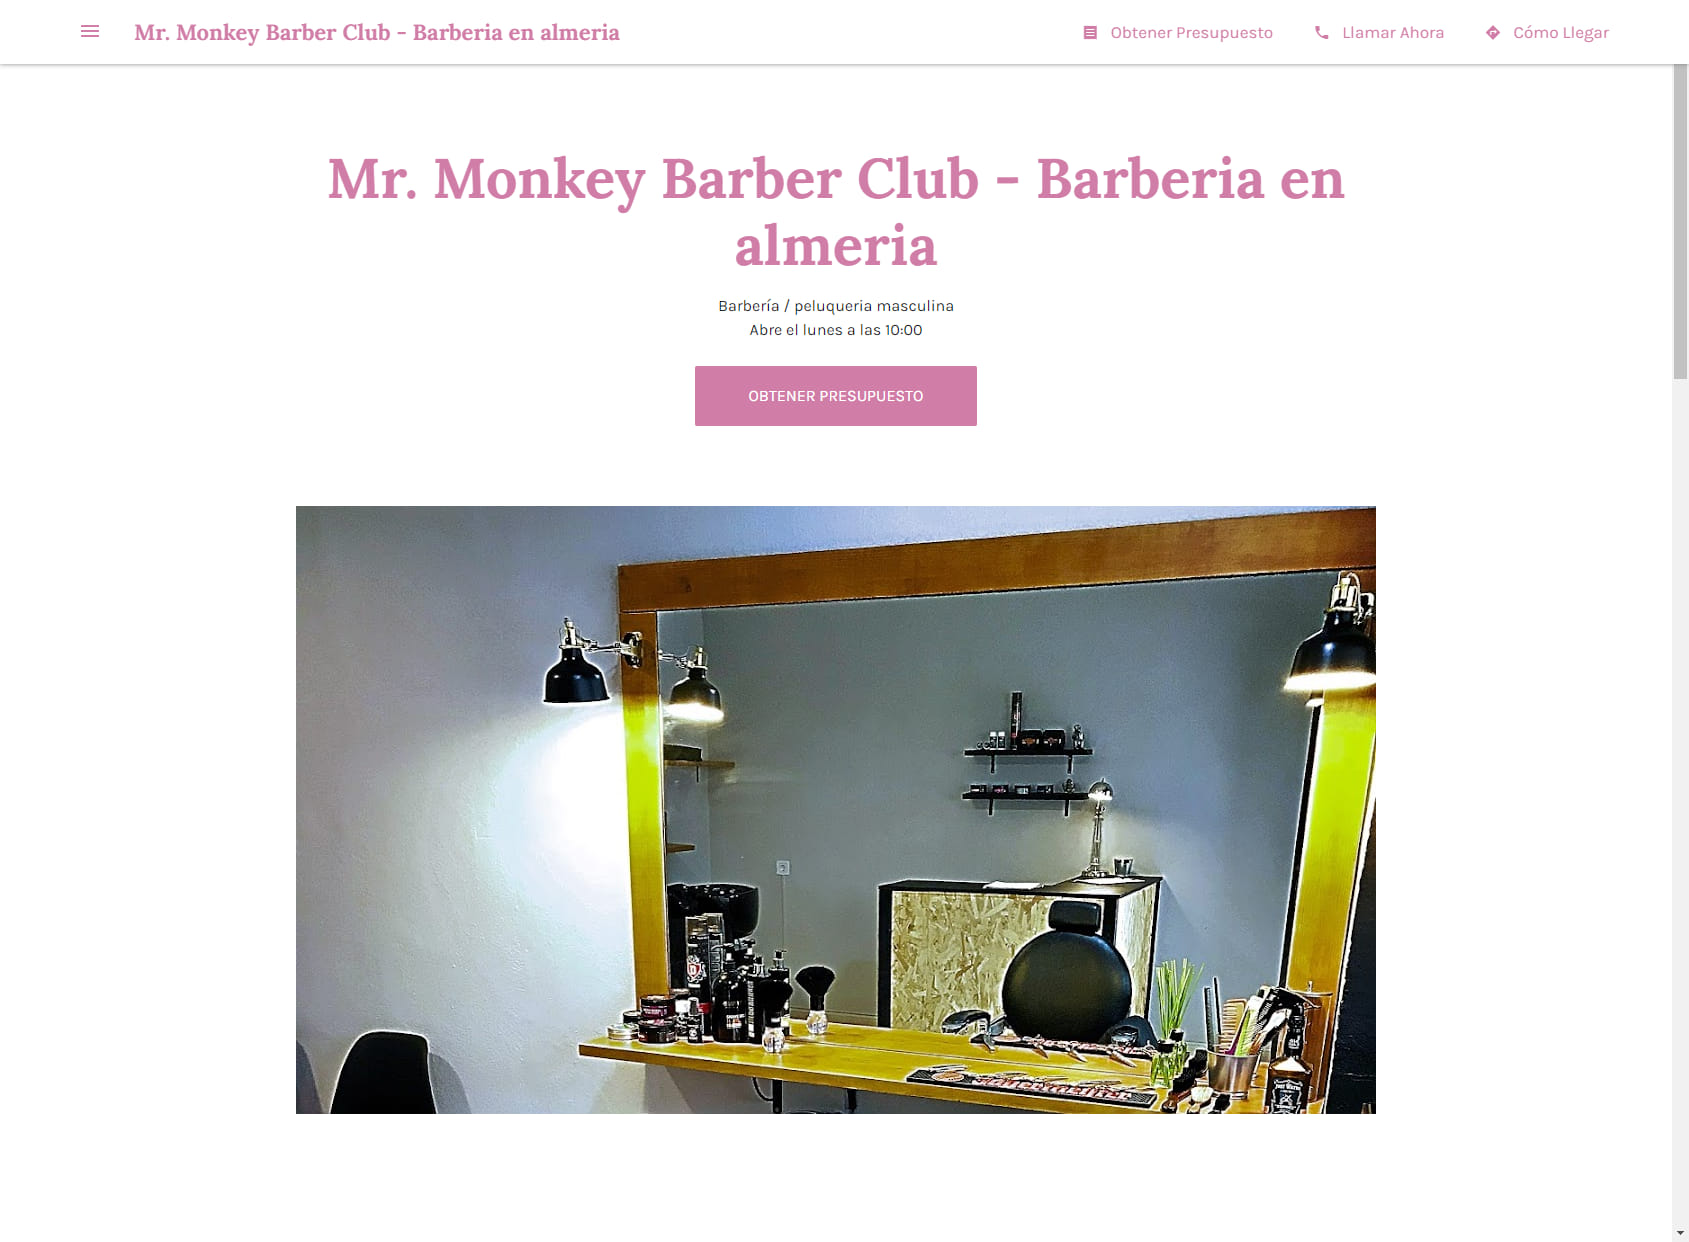 Mr. Monkey Barber Club - Barberia en almeria